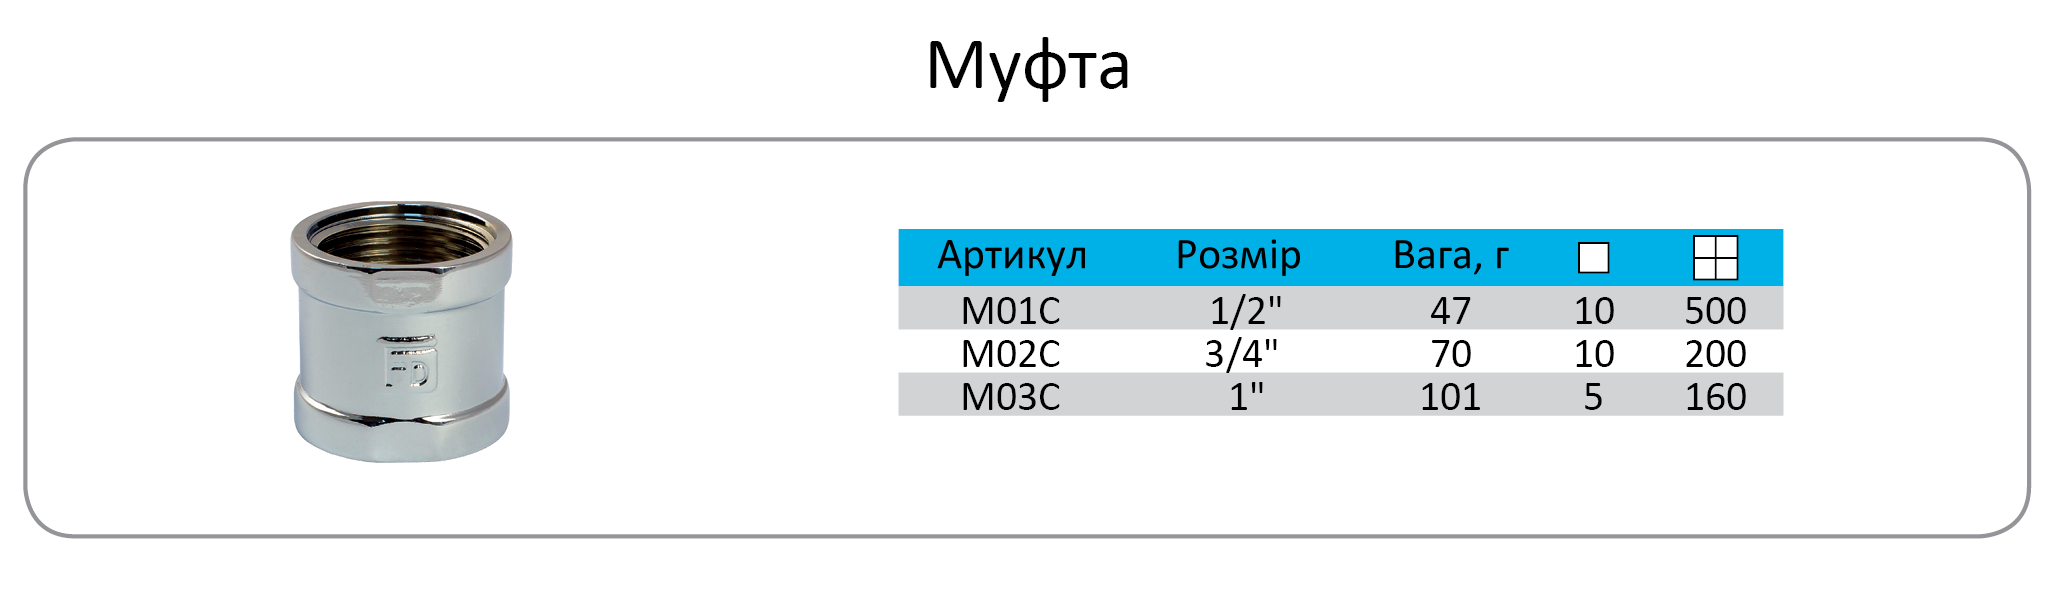 24 MO1C-укр